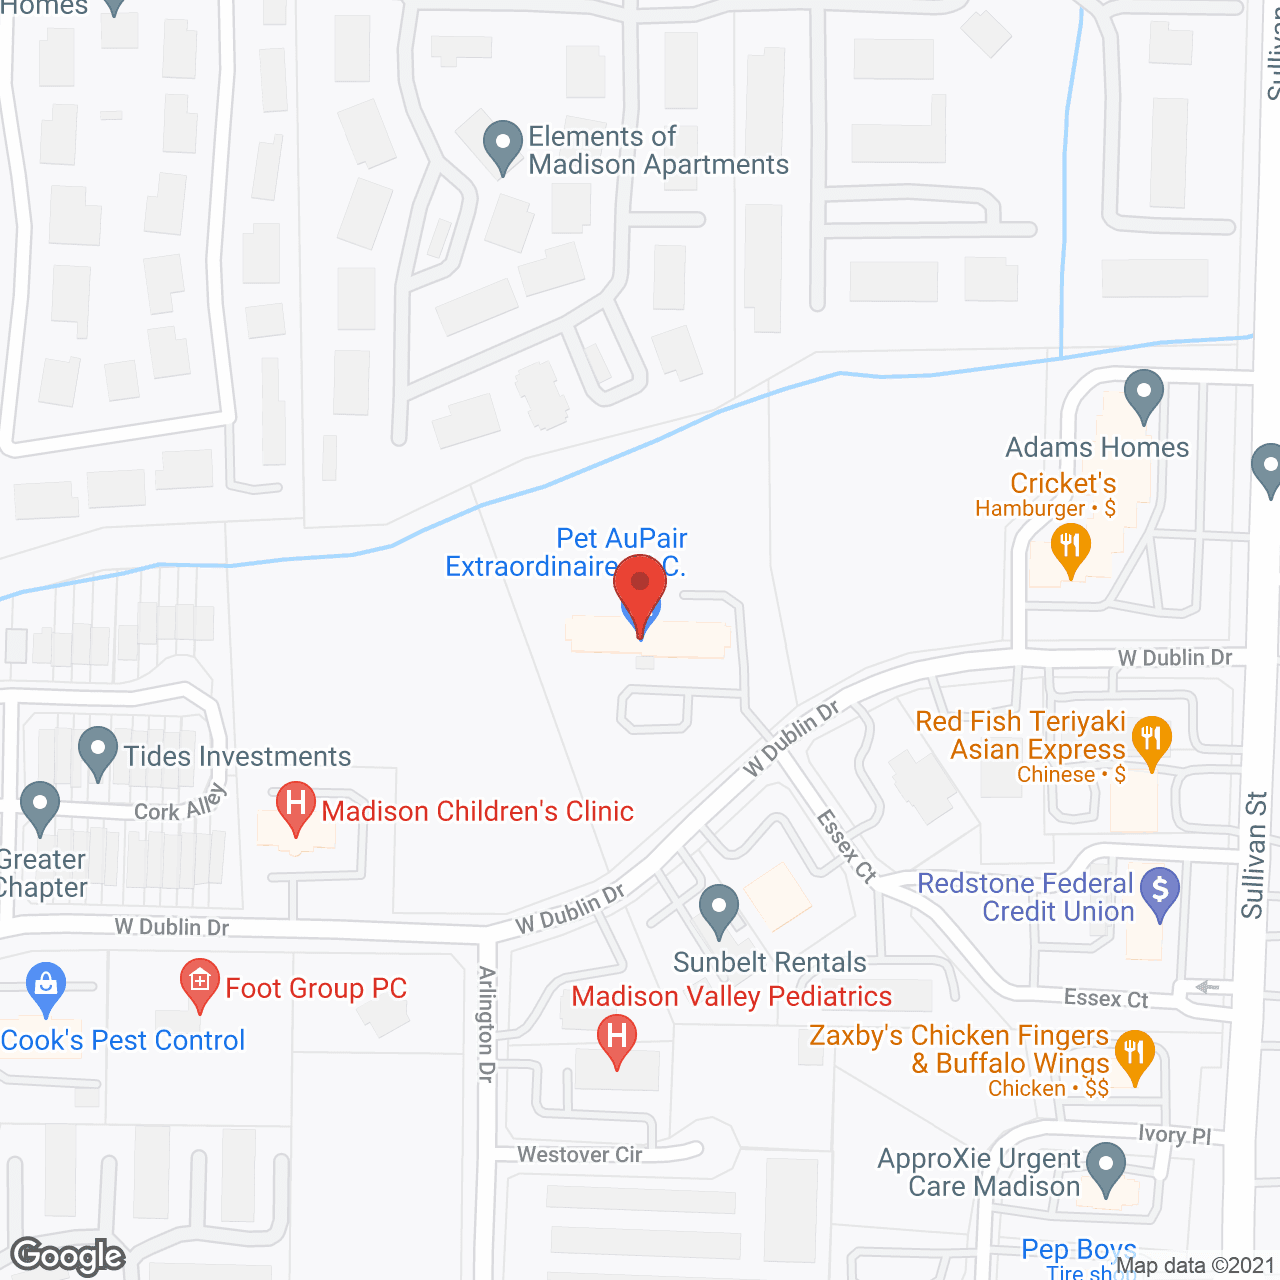 Dublin Village Apartments in google map